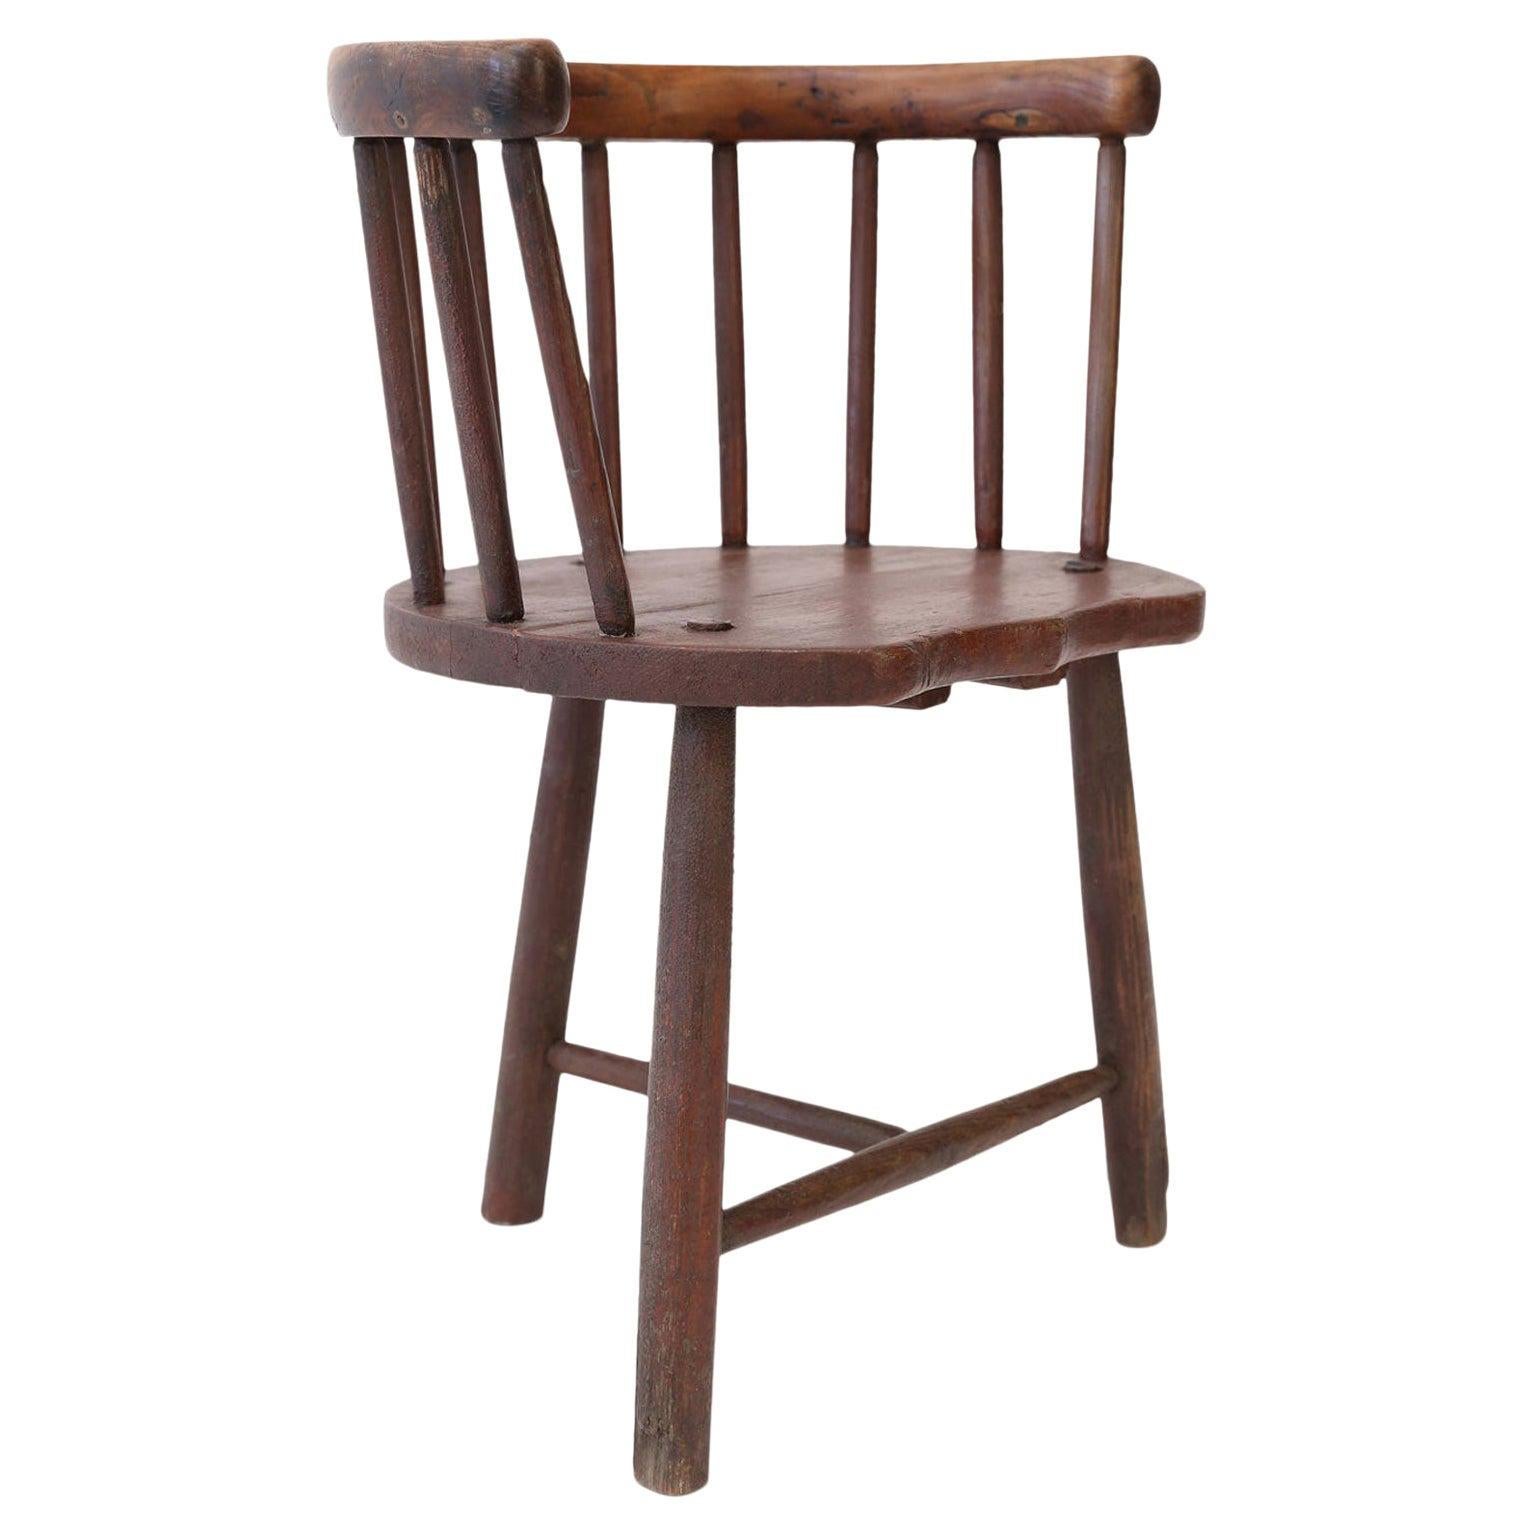 Scottish Horseshoe Back Chair For Sale